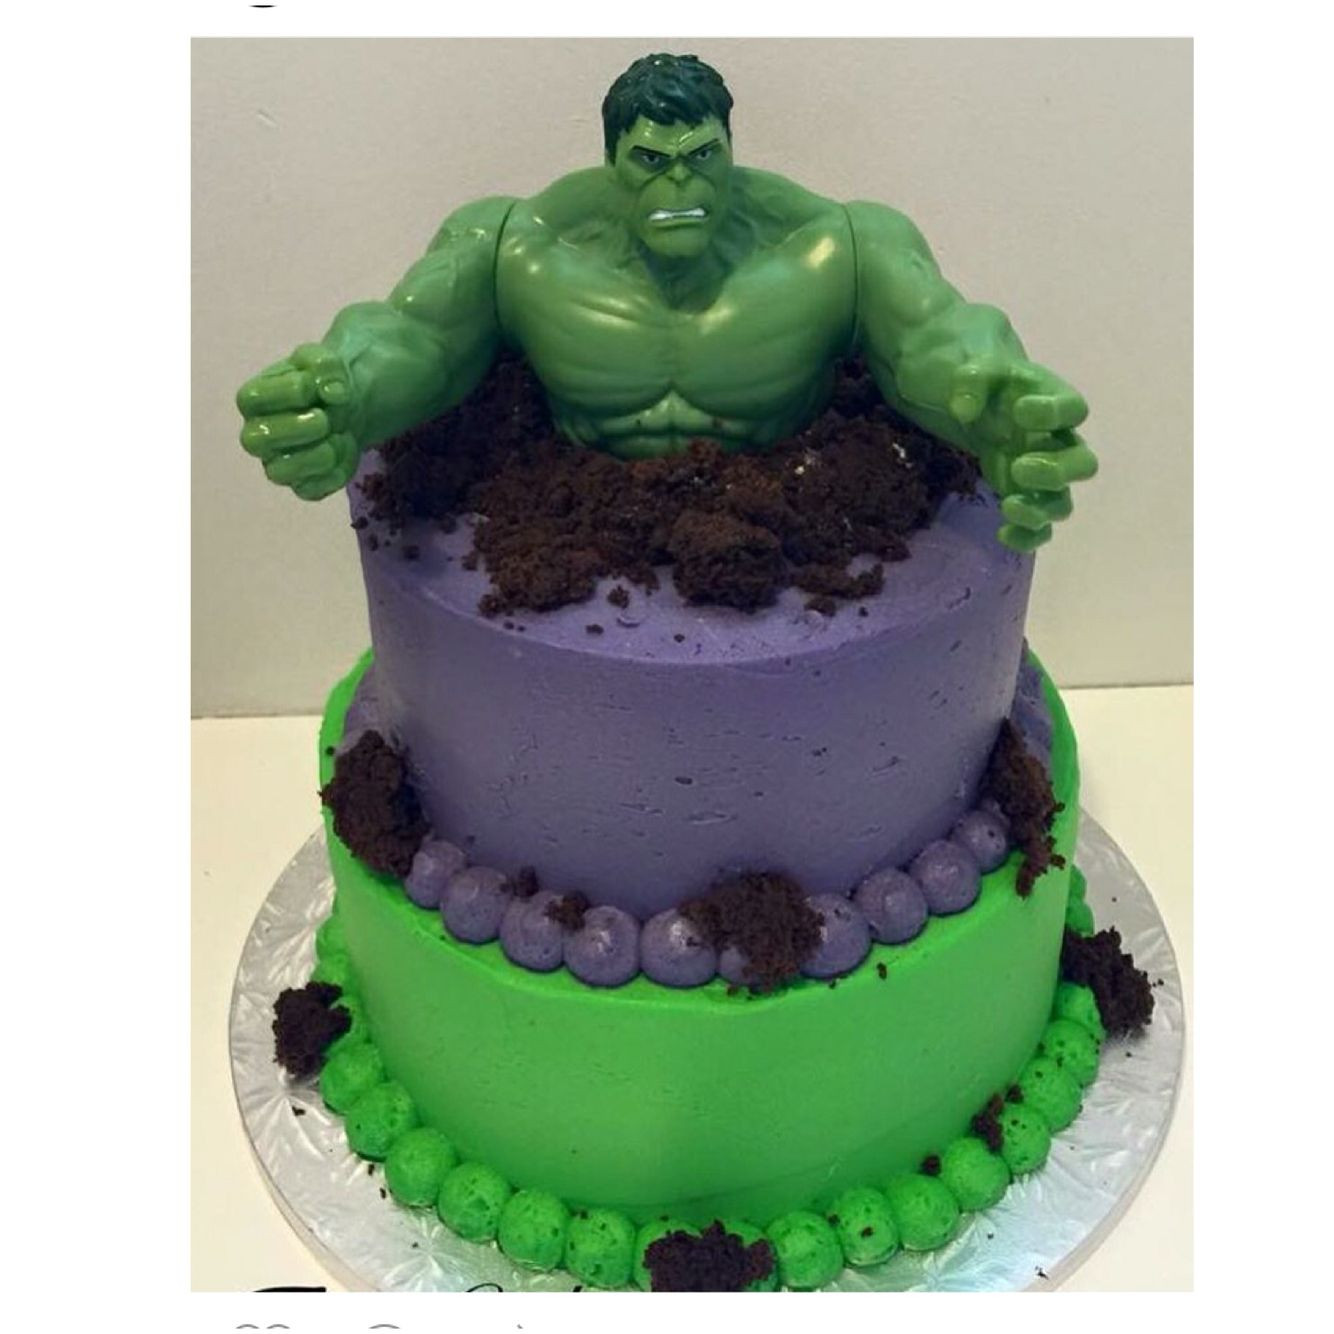 Best ideas about Hulk Birthday Cake
. Save or Pin Hulk cake … Now.